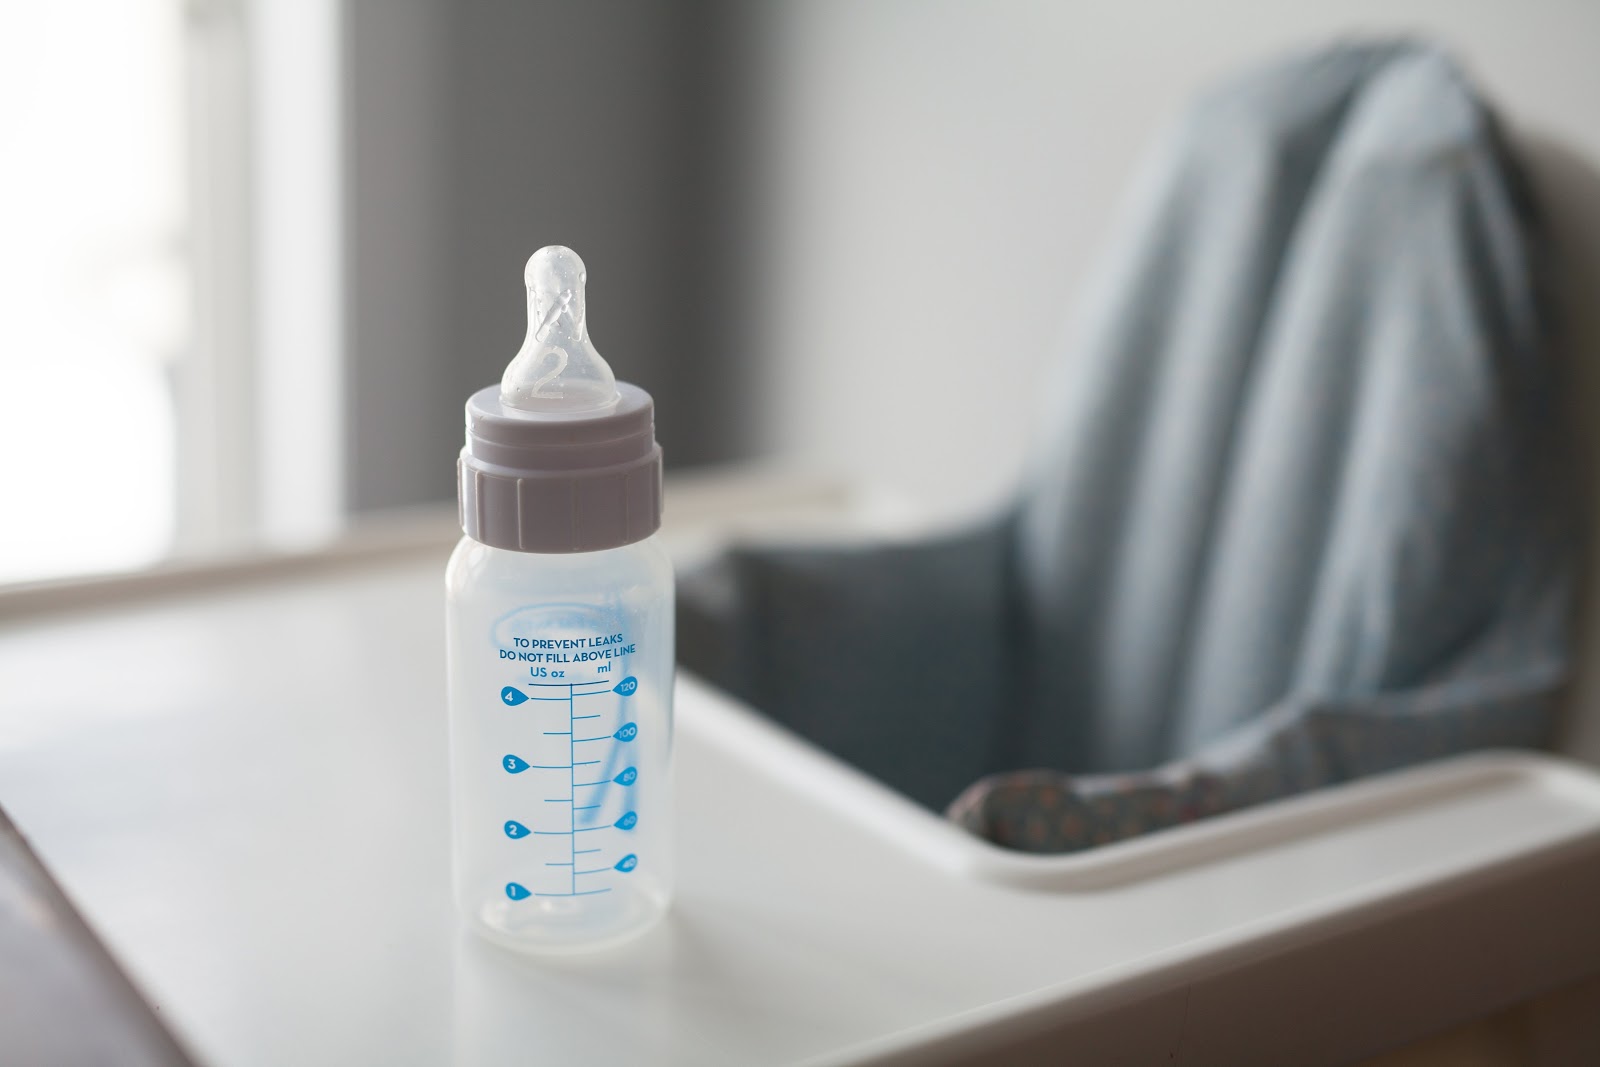 baby milk bottle